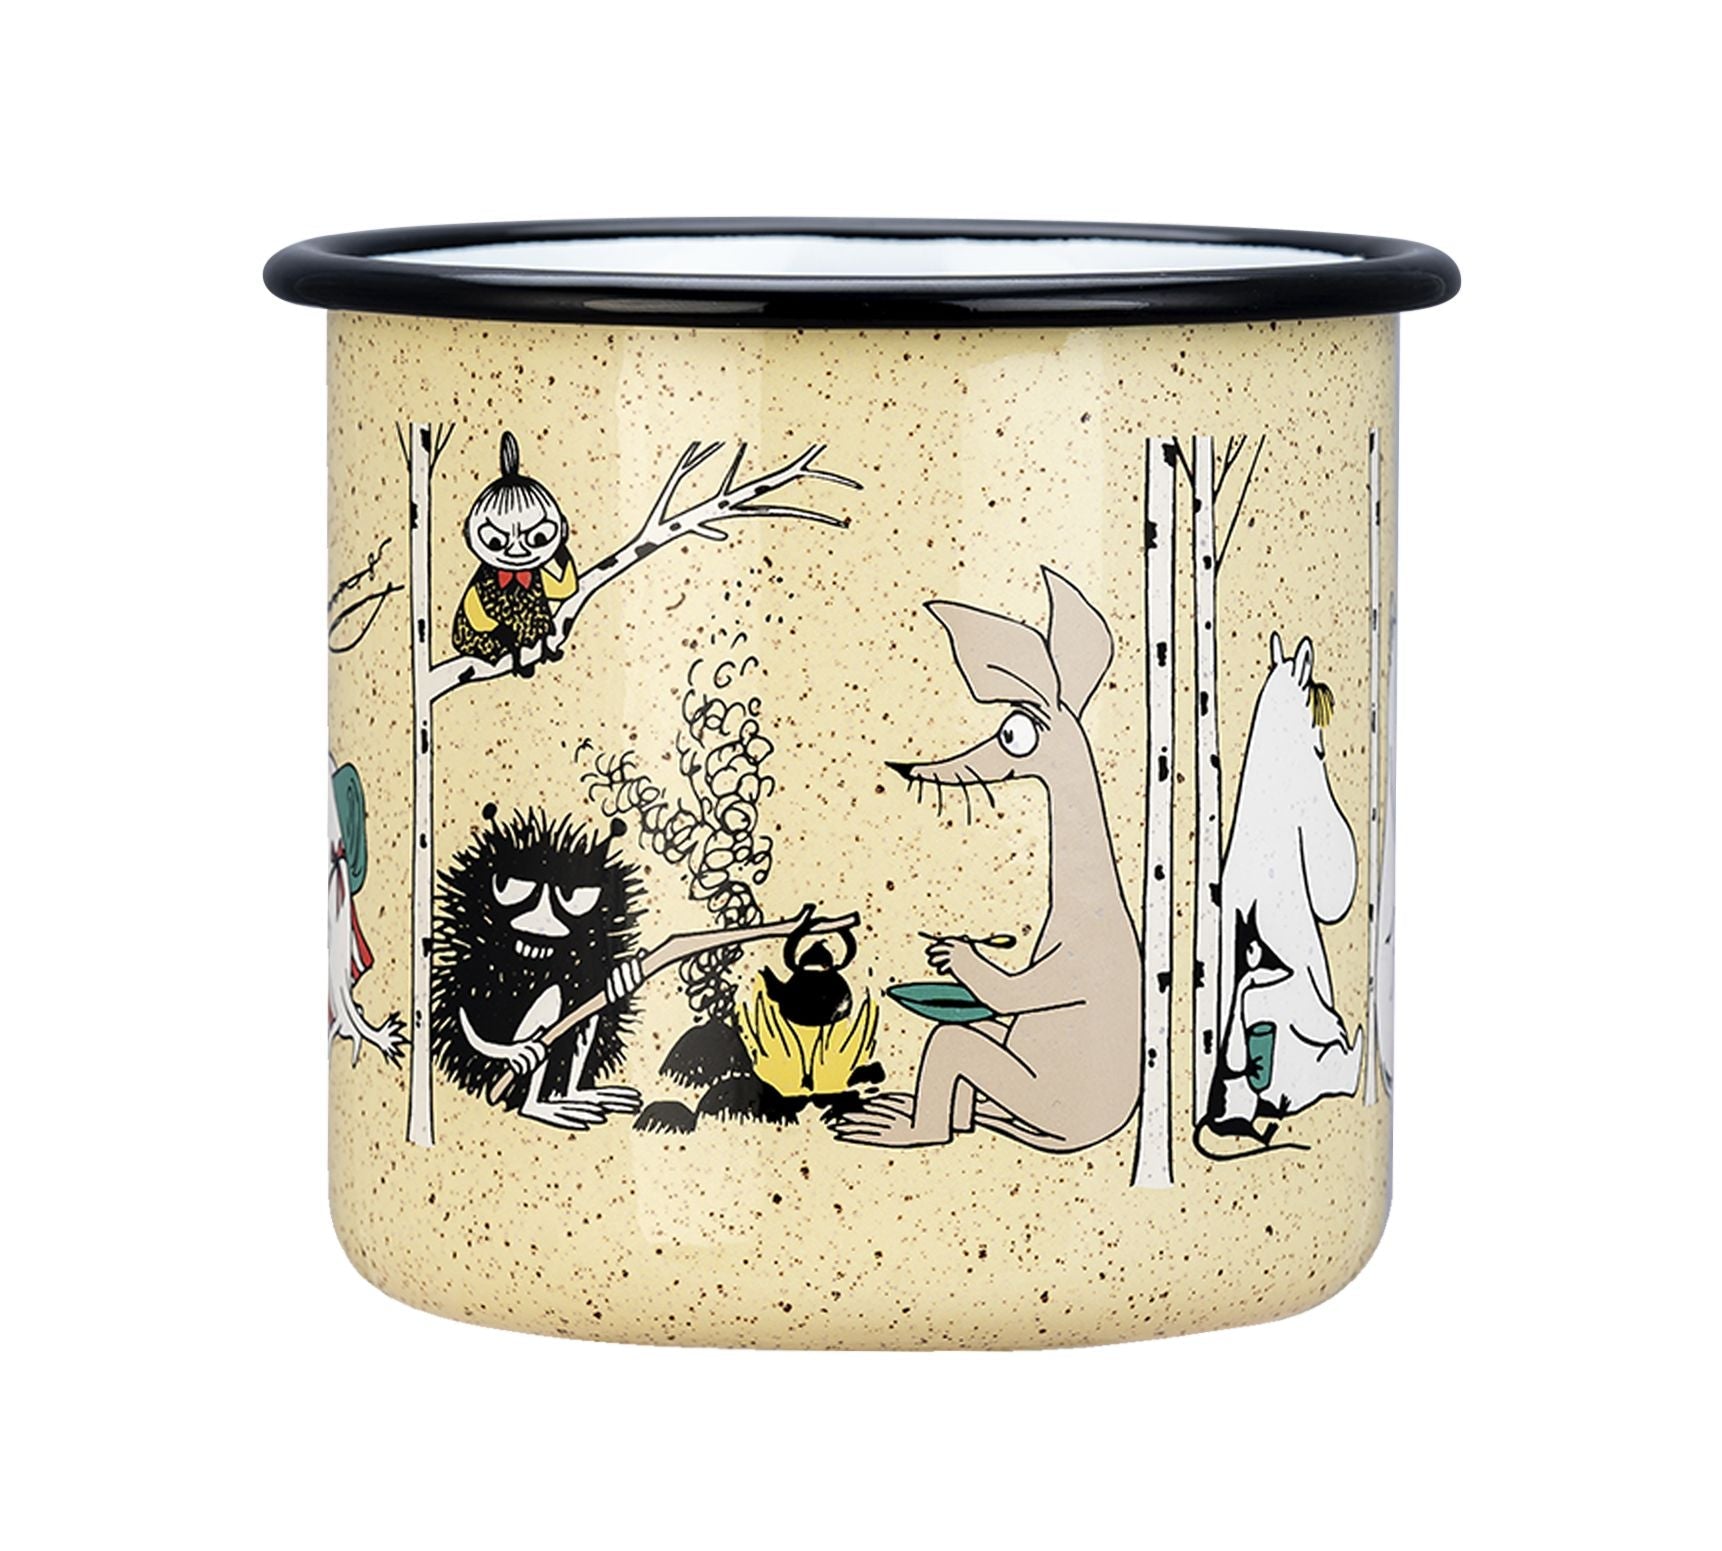 Muurla Moomin搪瓷杯营地